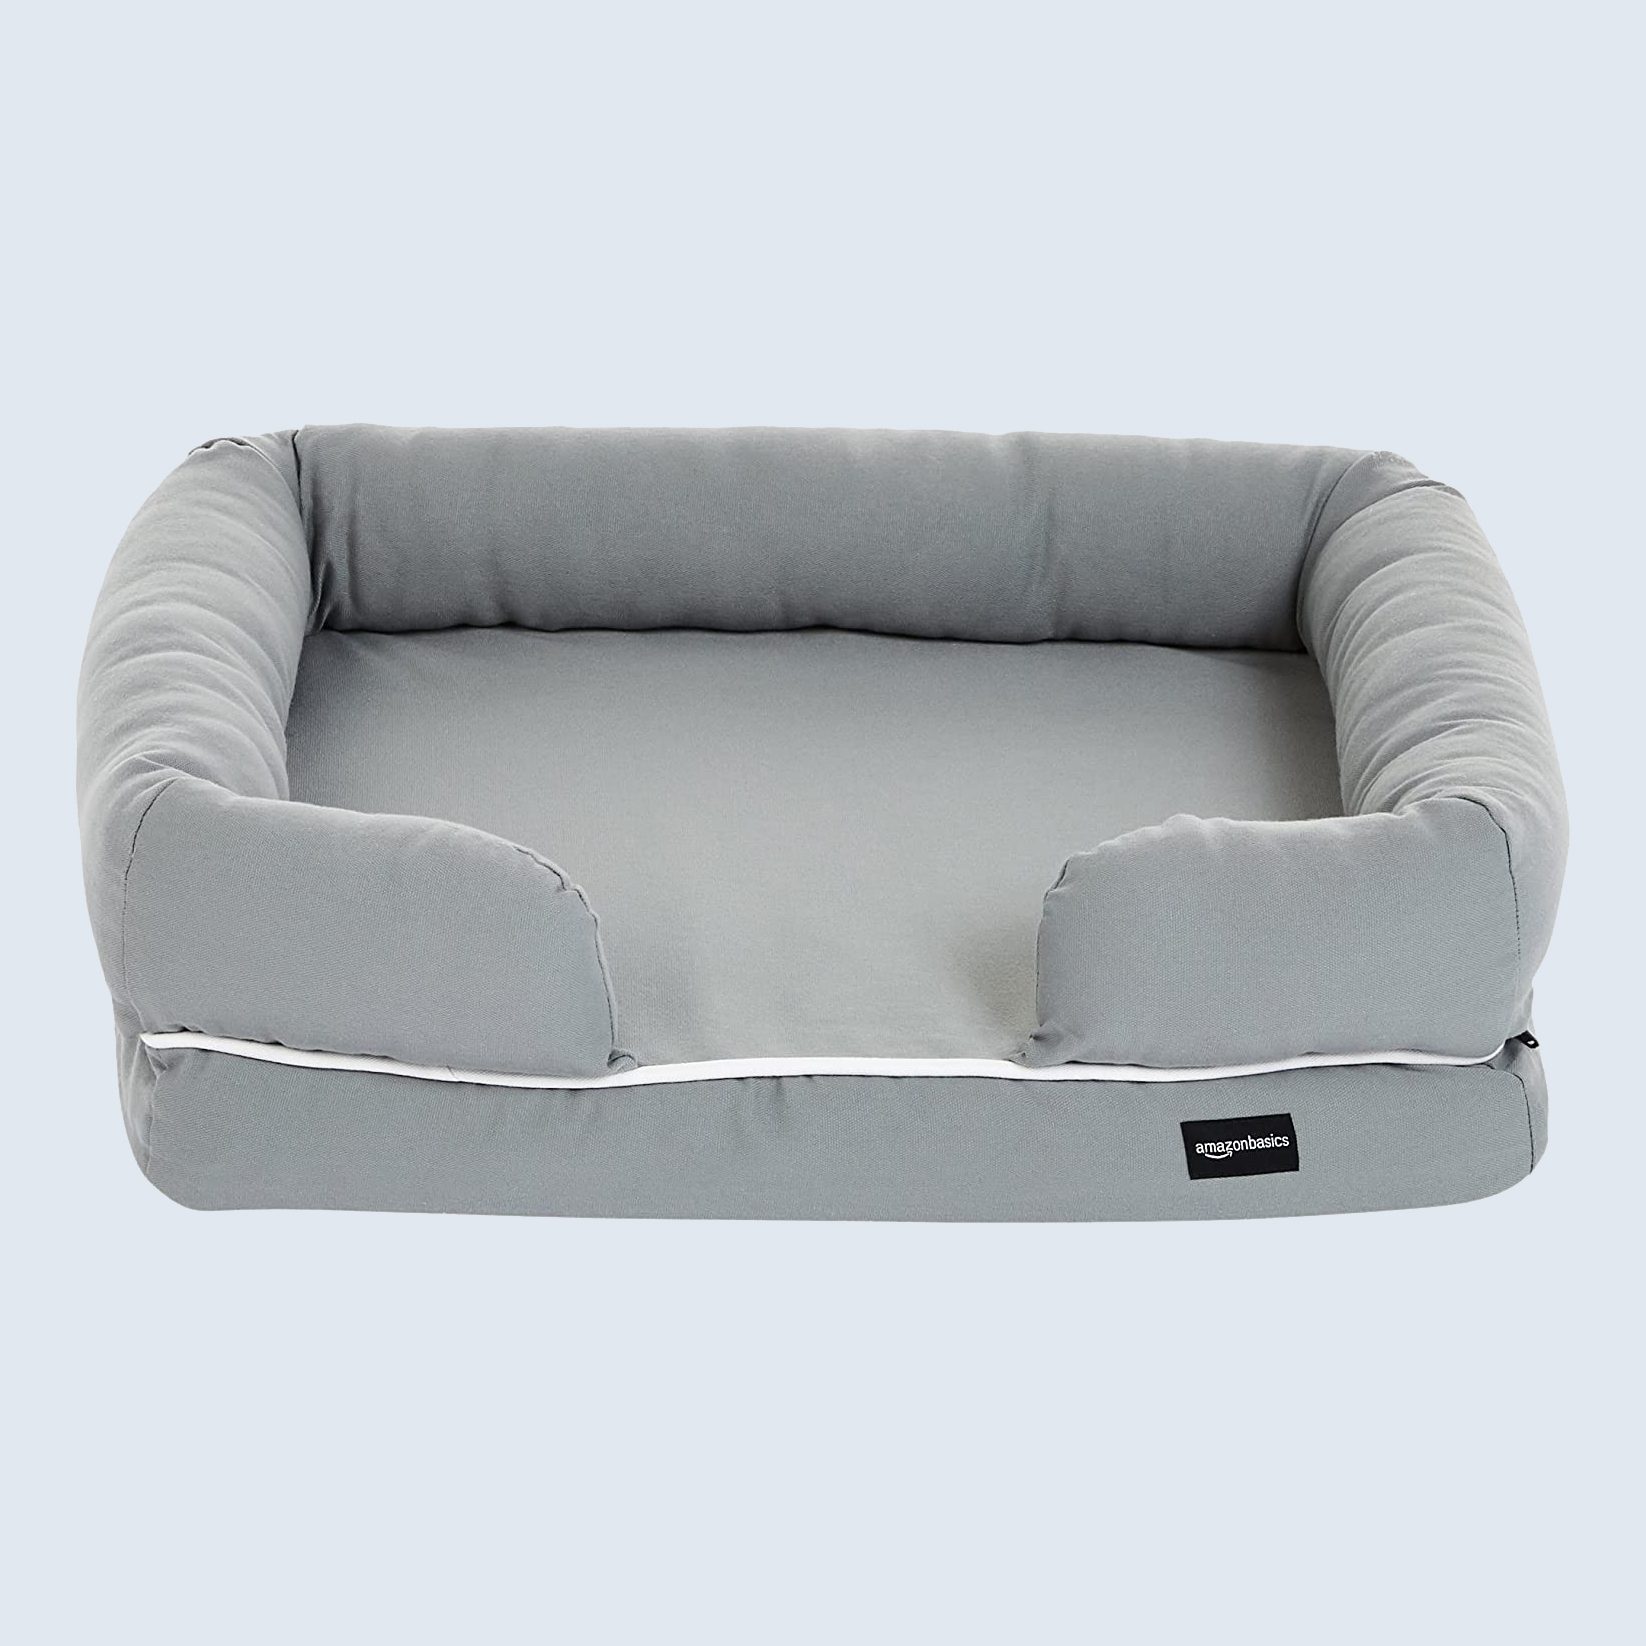 AmazonBasics Pet Sofa Lounger Bed